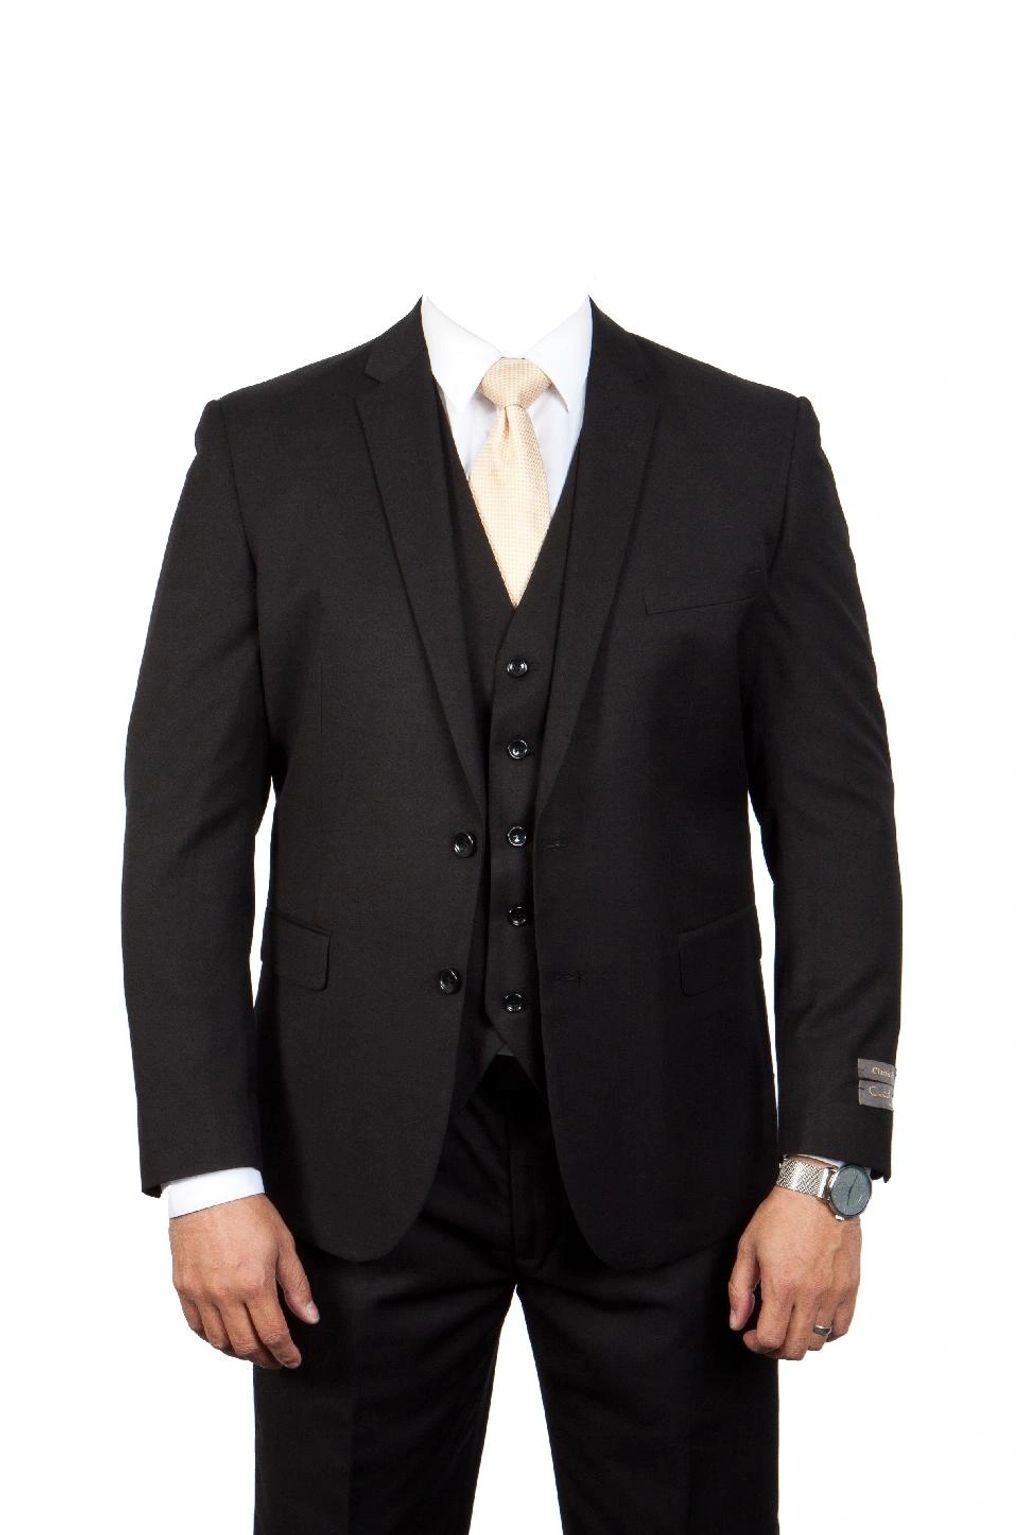 Black suit 6pc Rental $199.99
Colors:Lt grey, Mid Grey, Charcoal, White,Black,Navy,Indigo blue & Tan